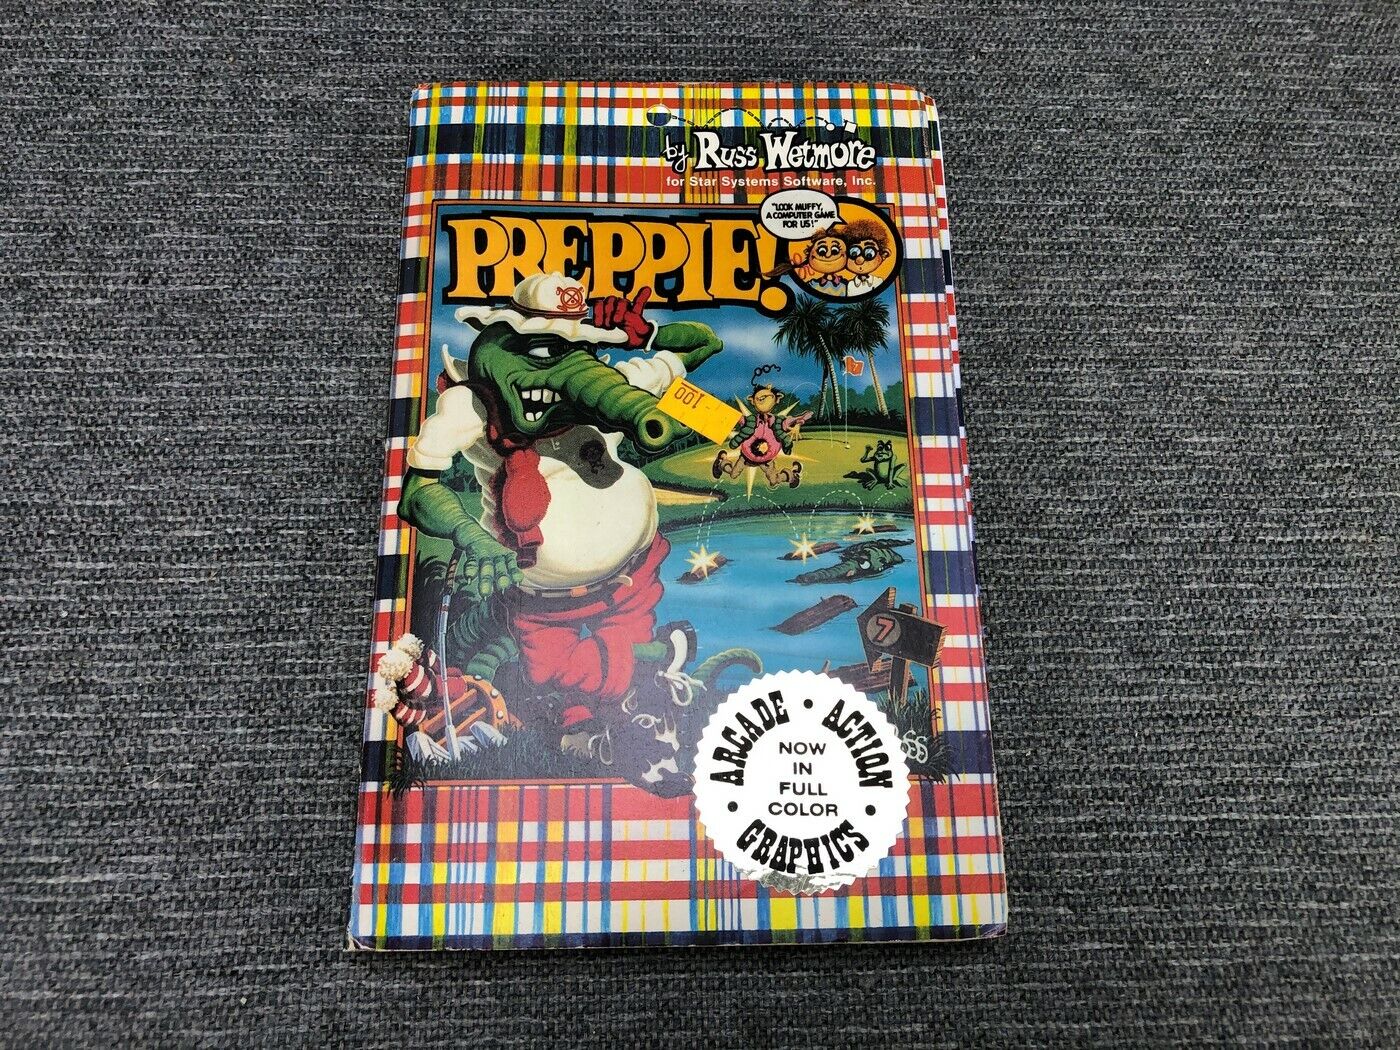 Preppie (Atari 8-Bit Computer, 1982) | Adventure International/Russ Wetmore